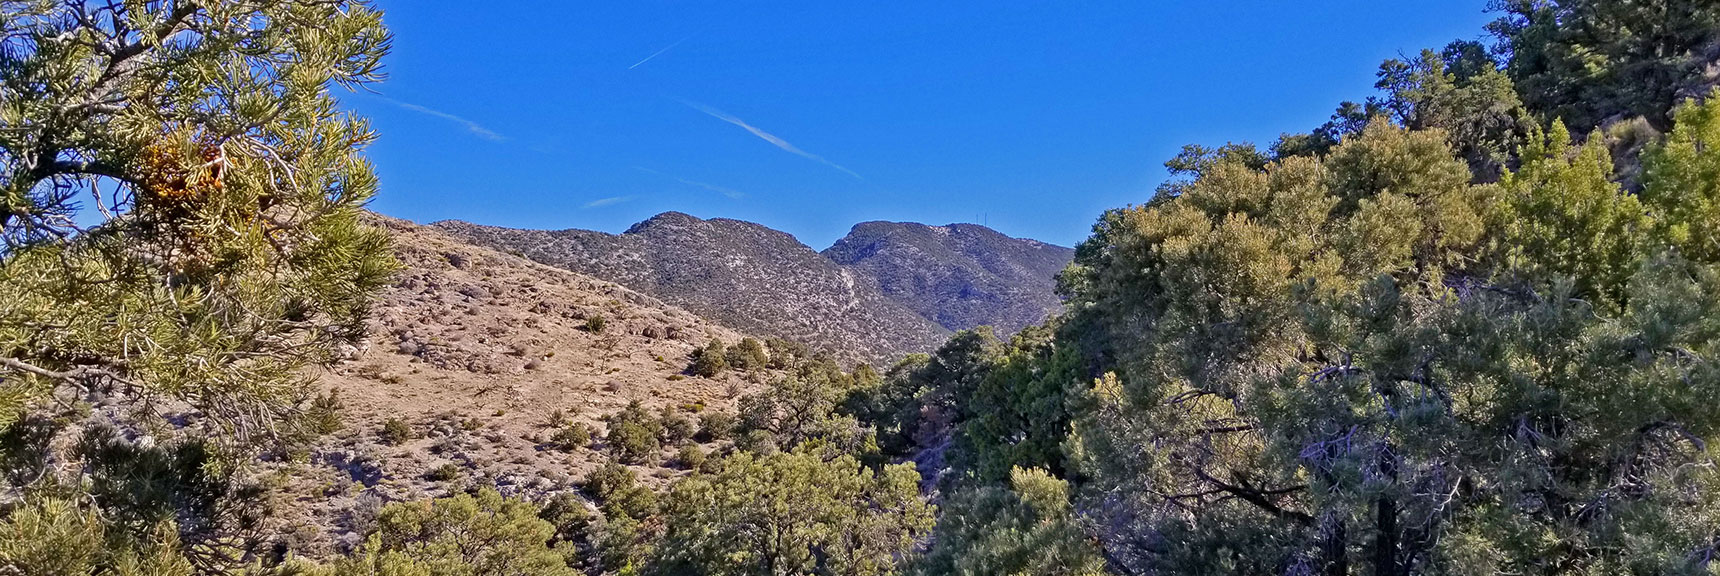 Rounding the First Bluff. View of Potosi Mt. Summit and Intervening Cliffline Appears | Potosi Mt. Summit via Western Cliffs Ridgeline, Spring Mountains, Nevada